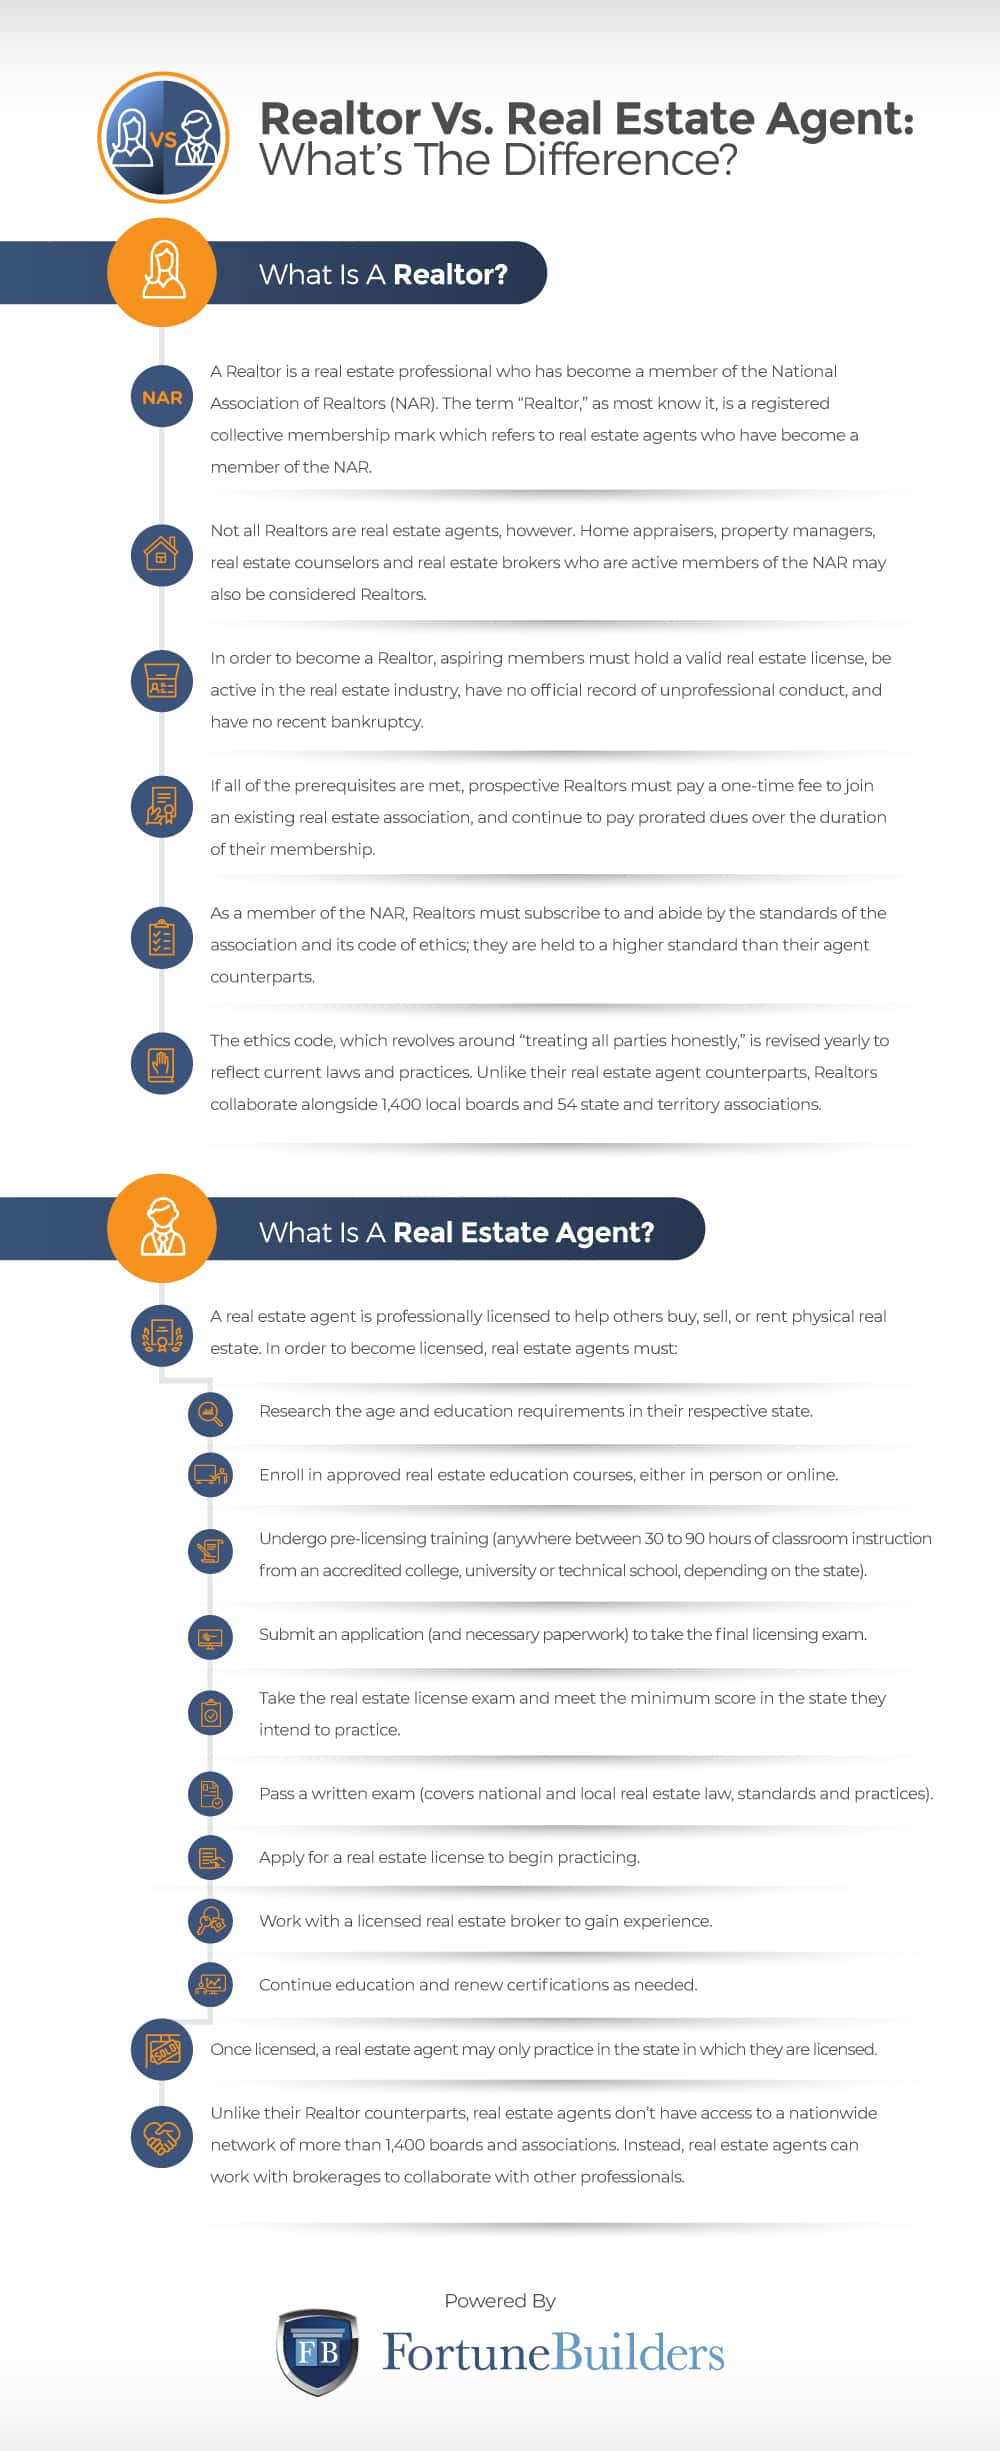 Real estate agent vs Realtor